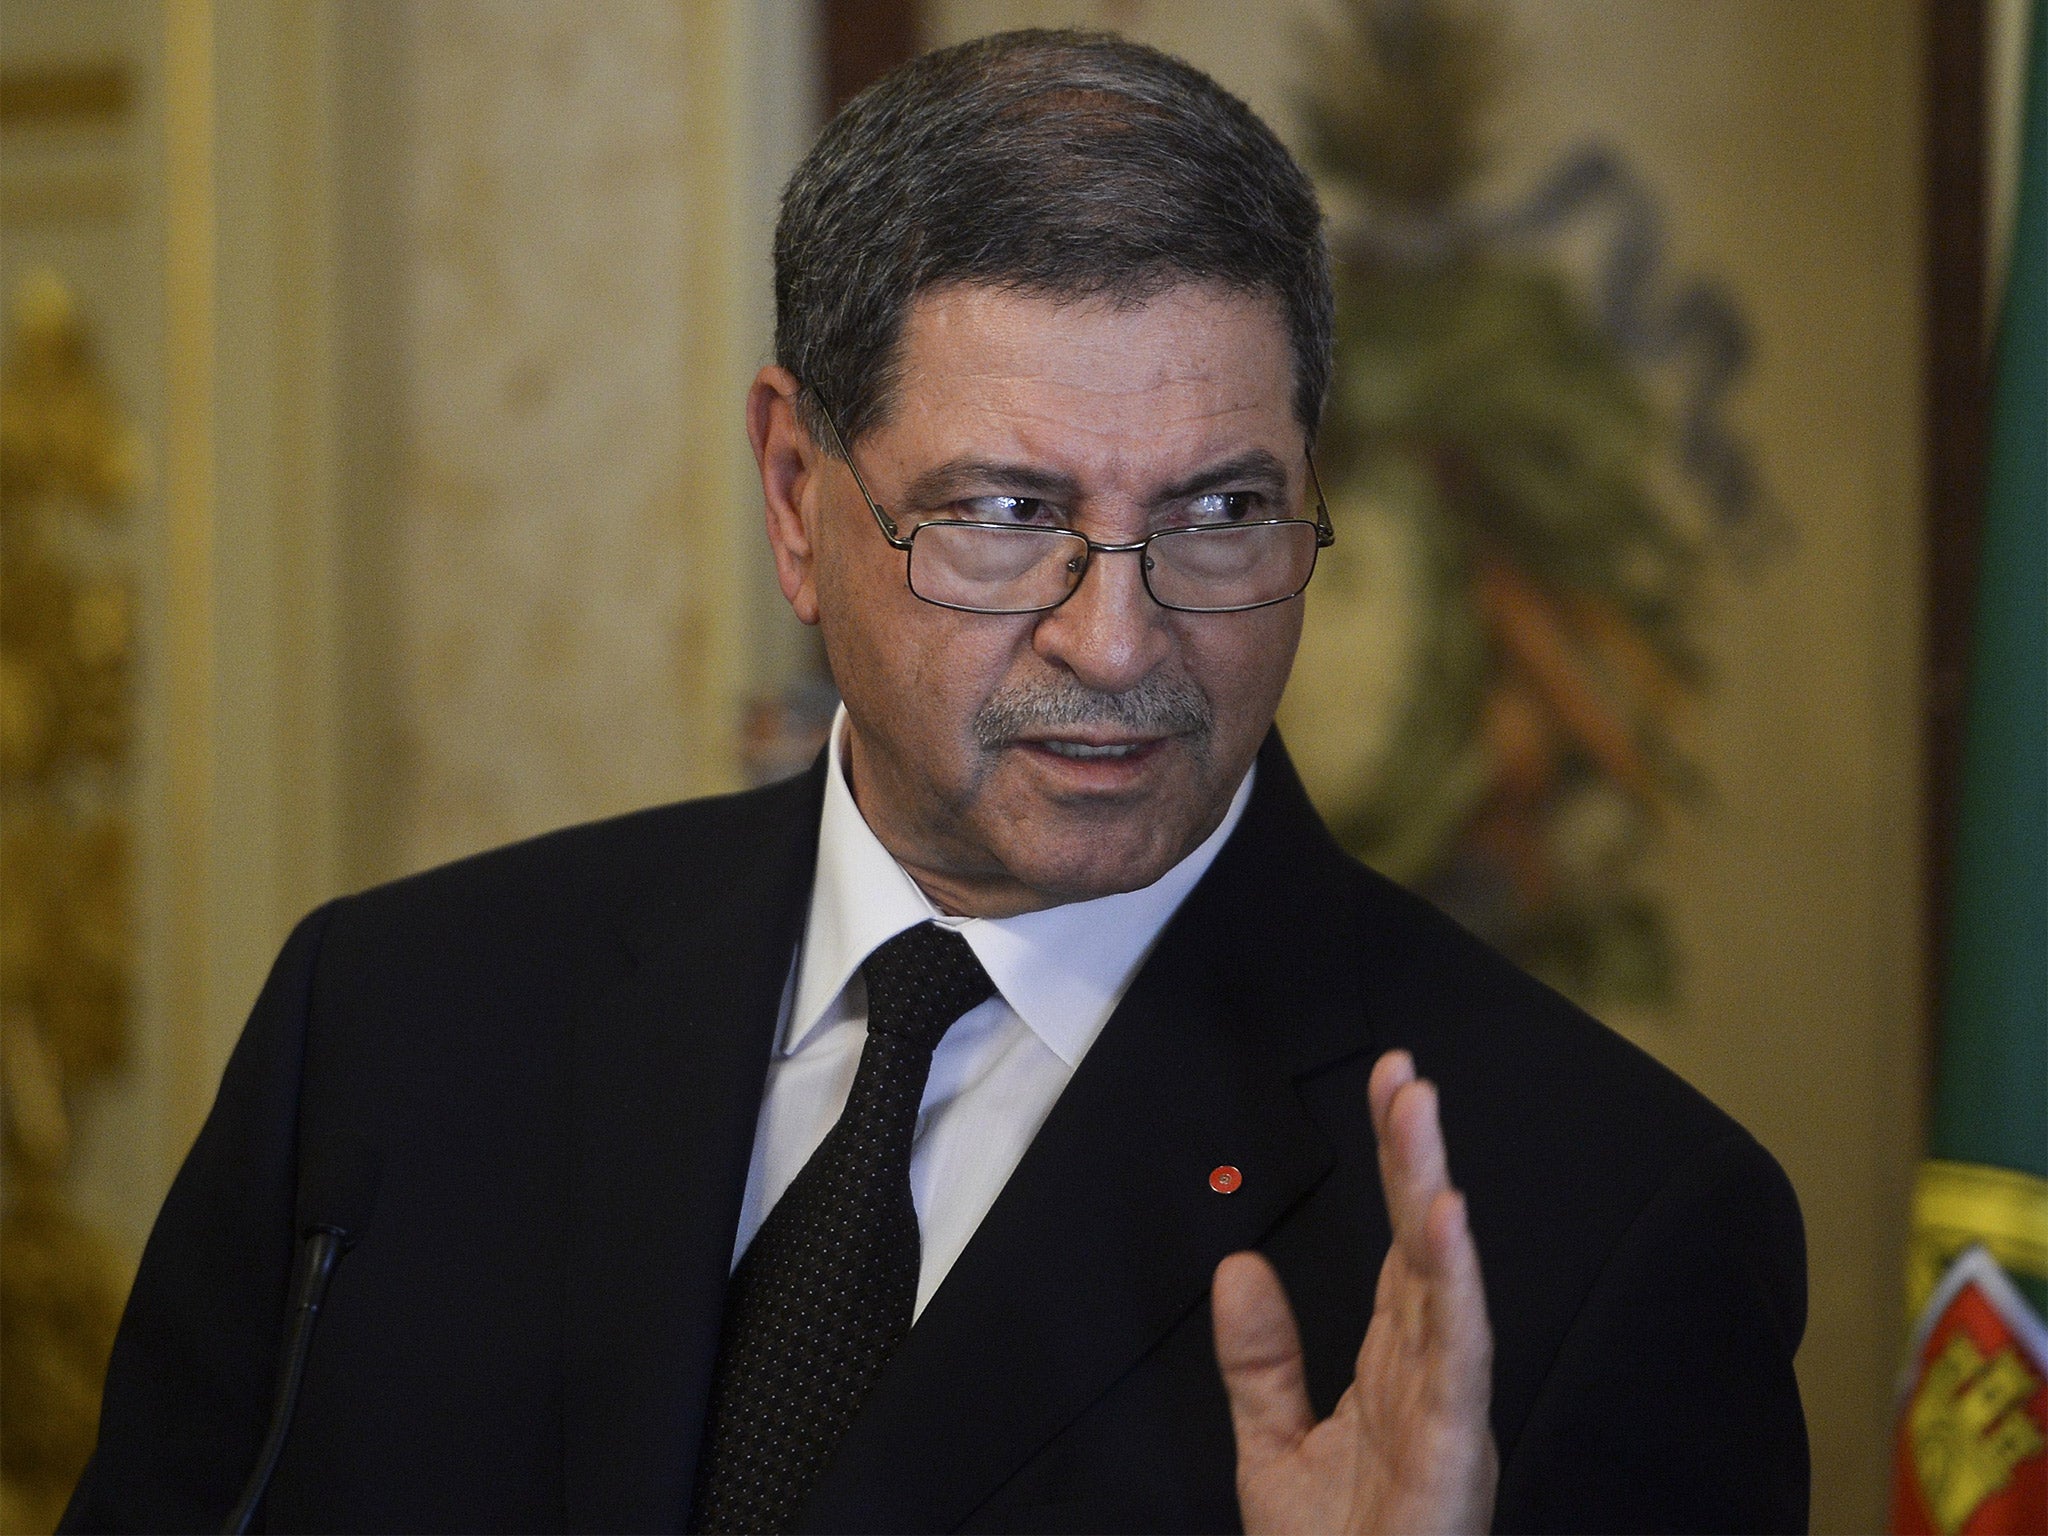 Tunisian Prime Minister, Habib Essid